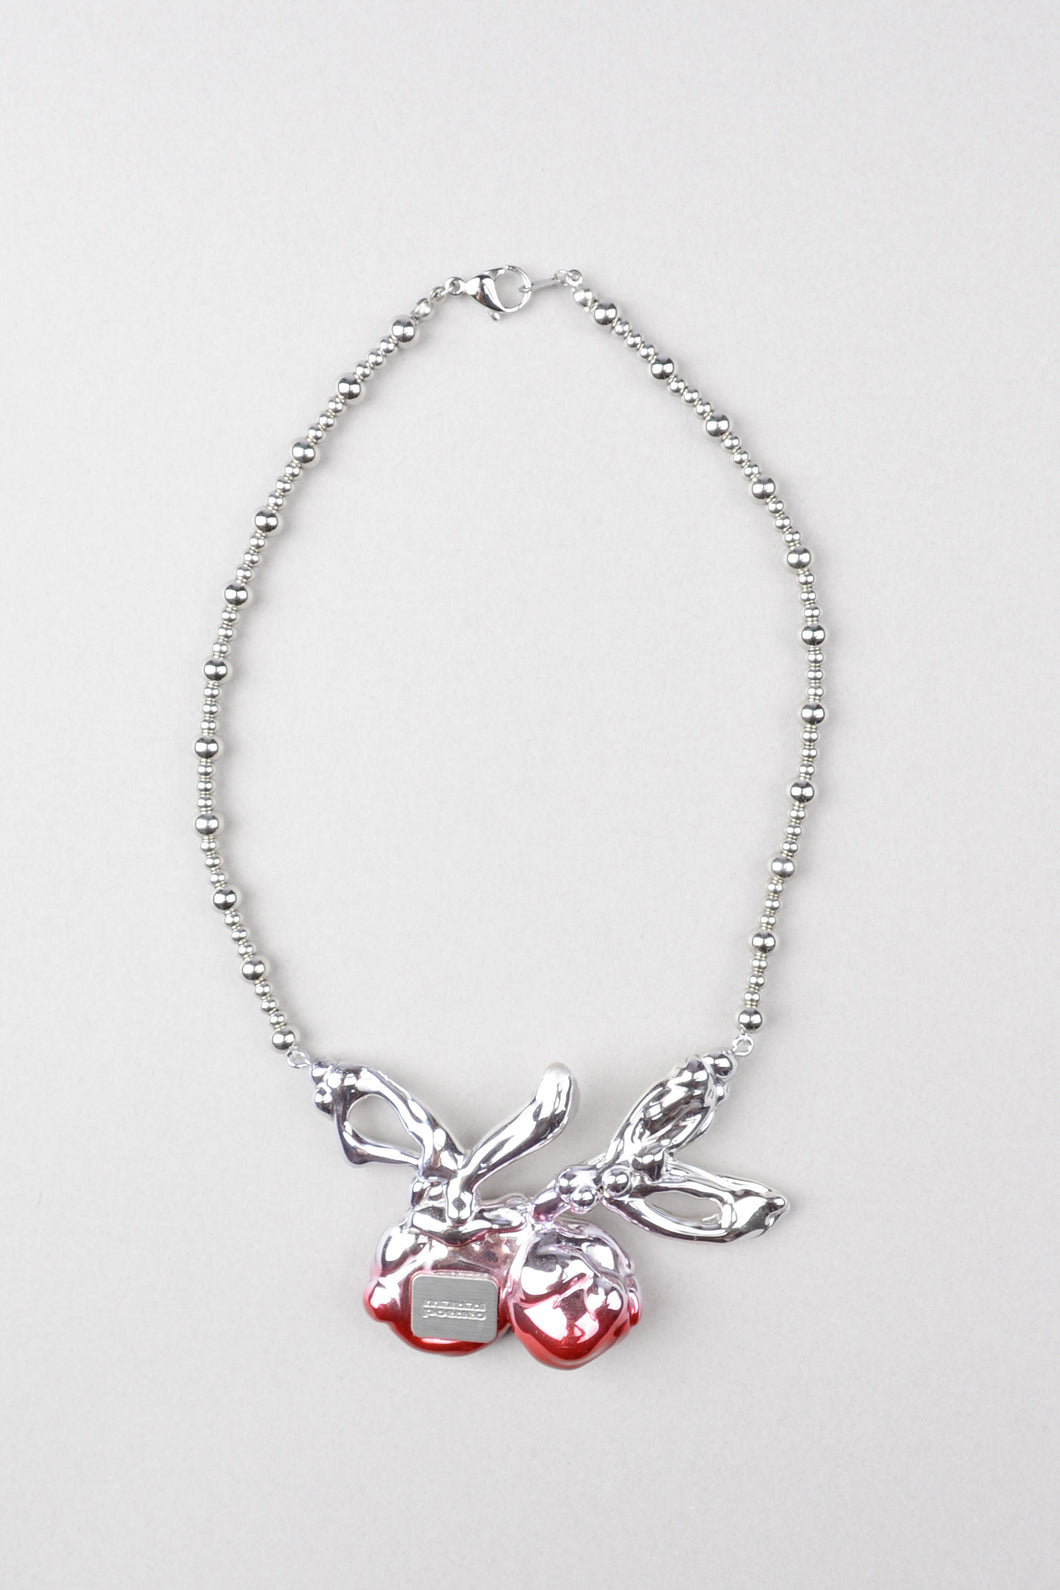 Wild cherry necklace